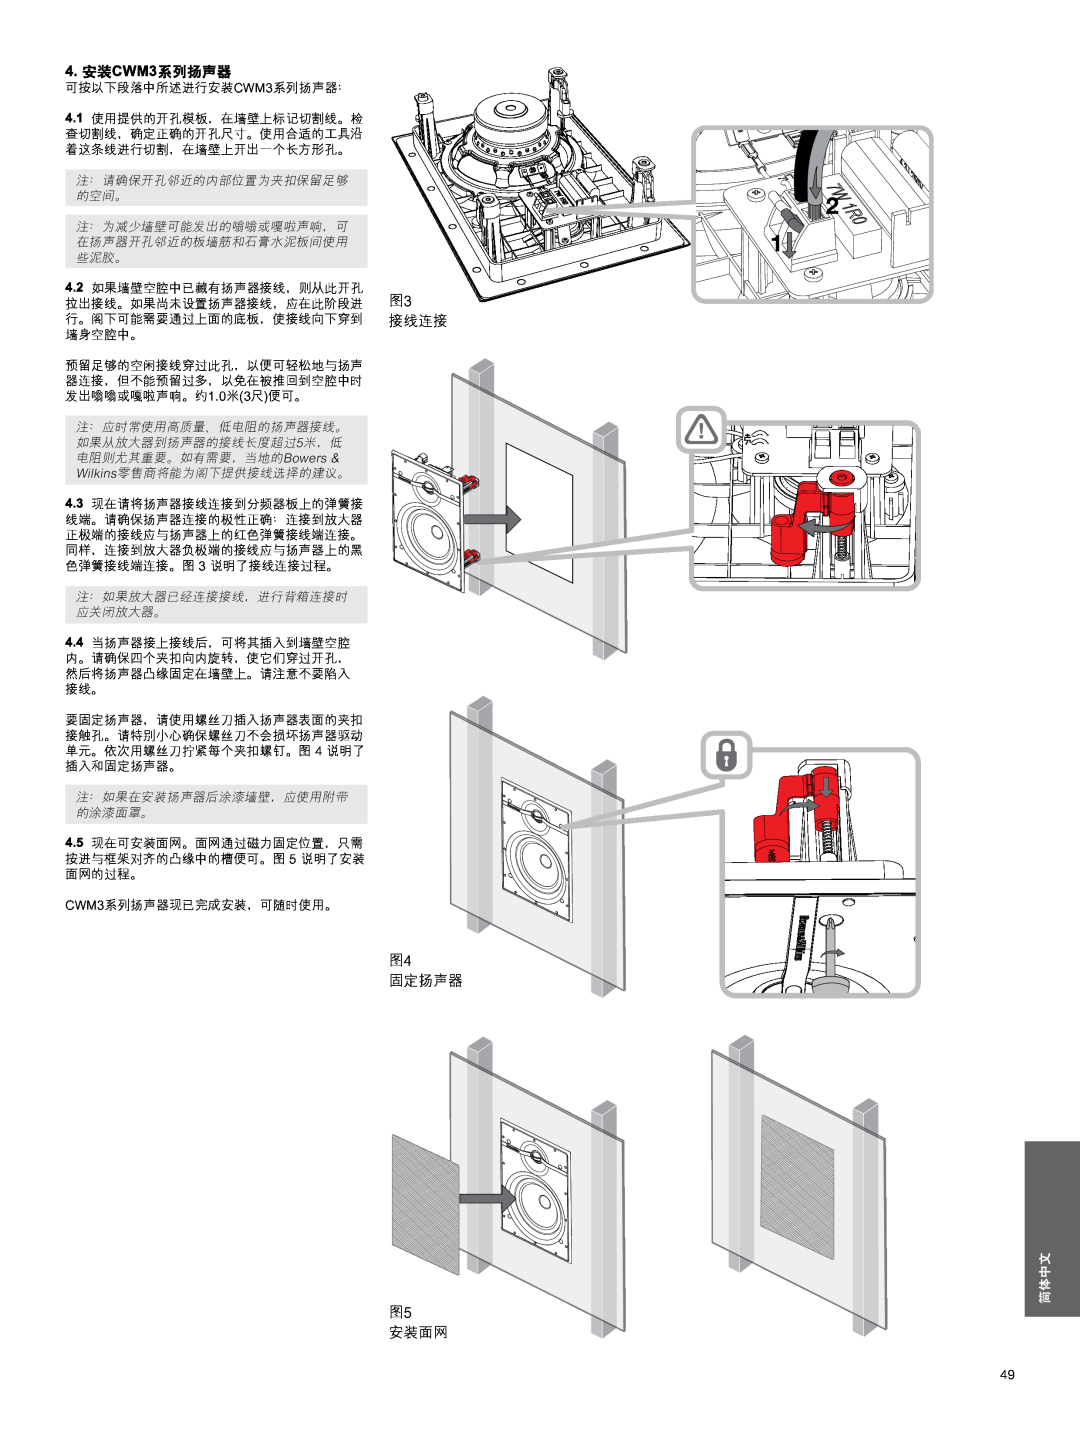 Bowers & Wilkins manual 4.安装CWM3系列扬声器, 图3 接线连接 图4 固定扬声器, 图5 安装面网, 简体中文 